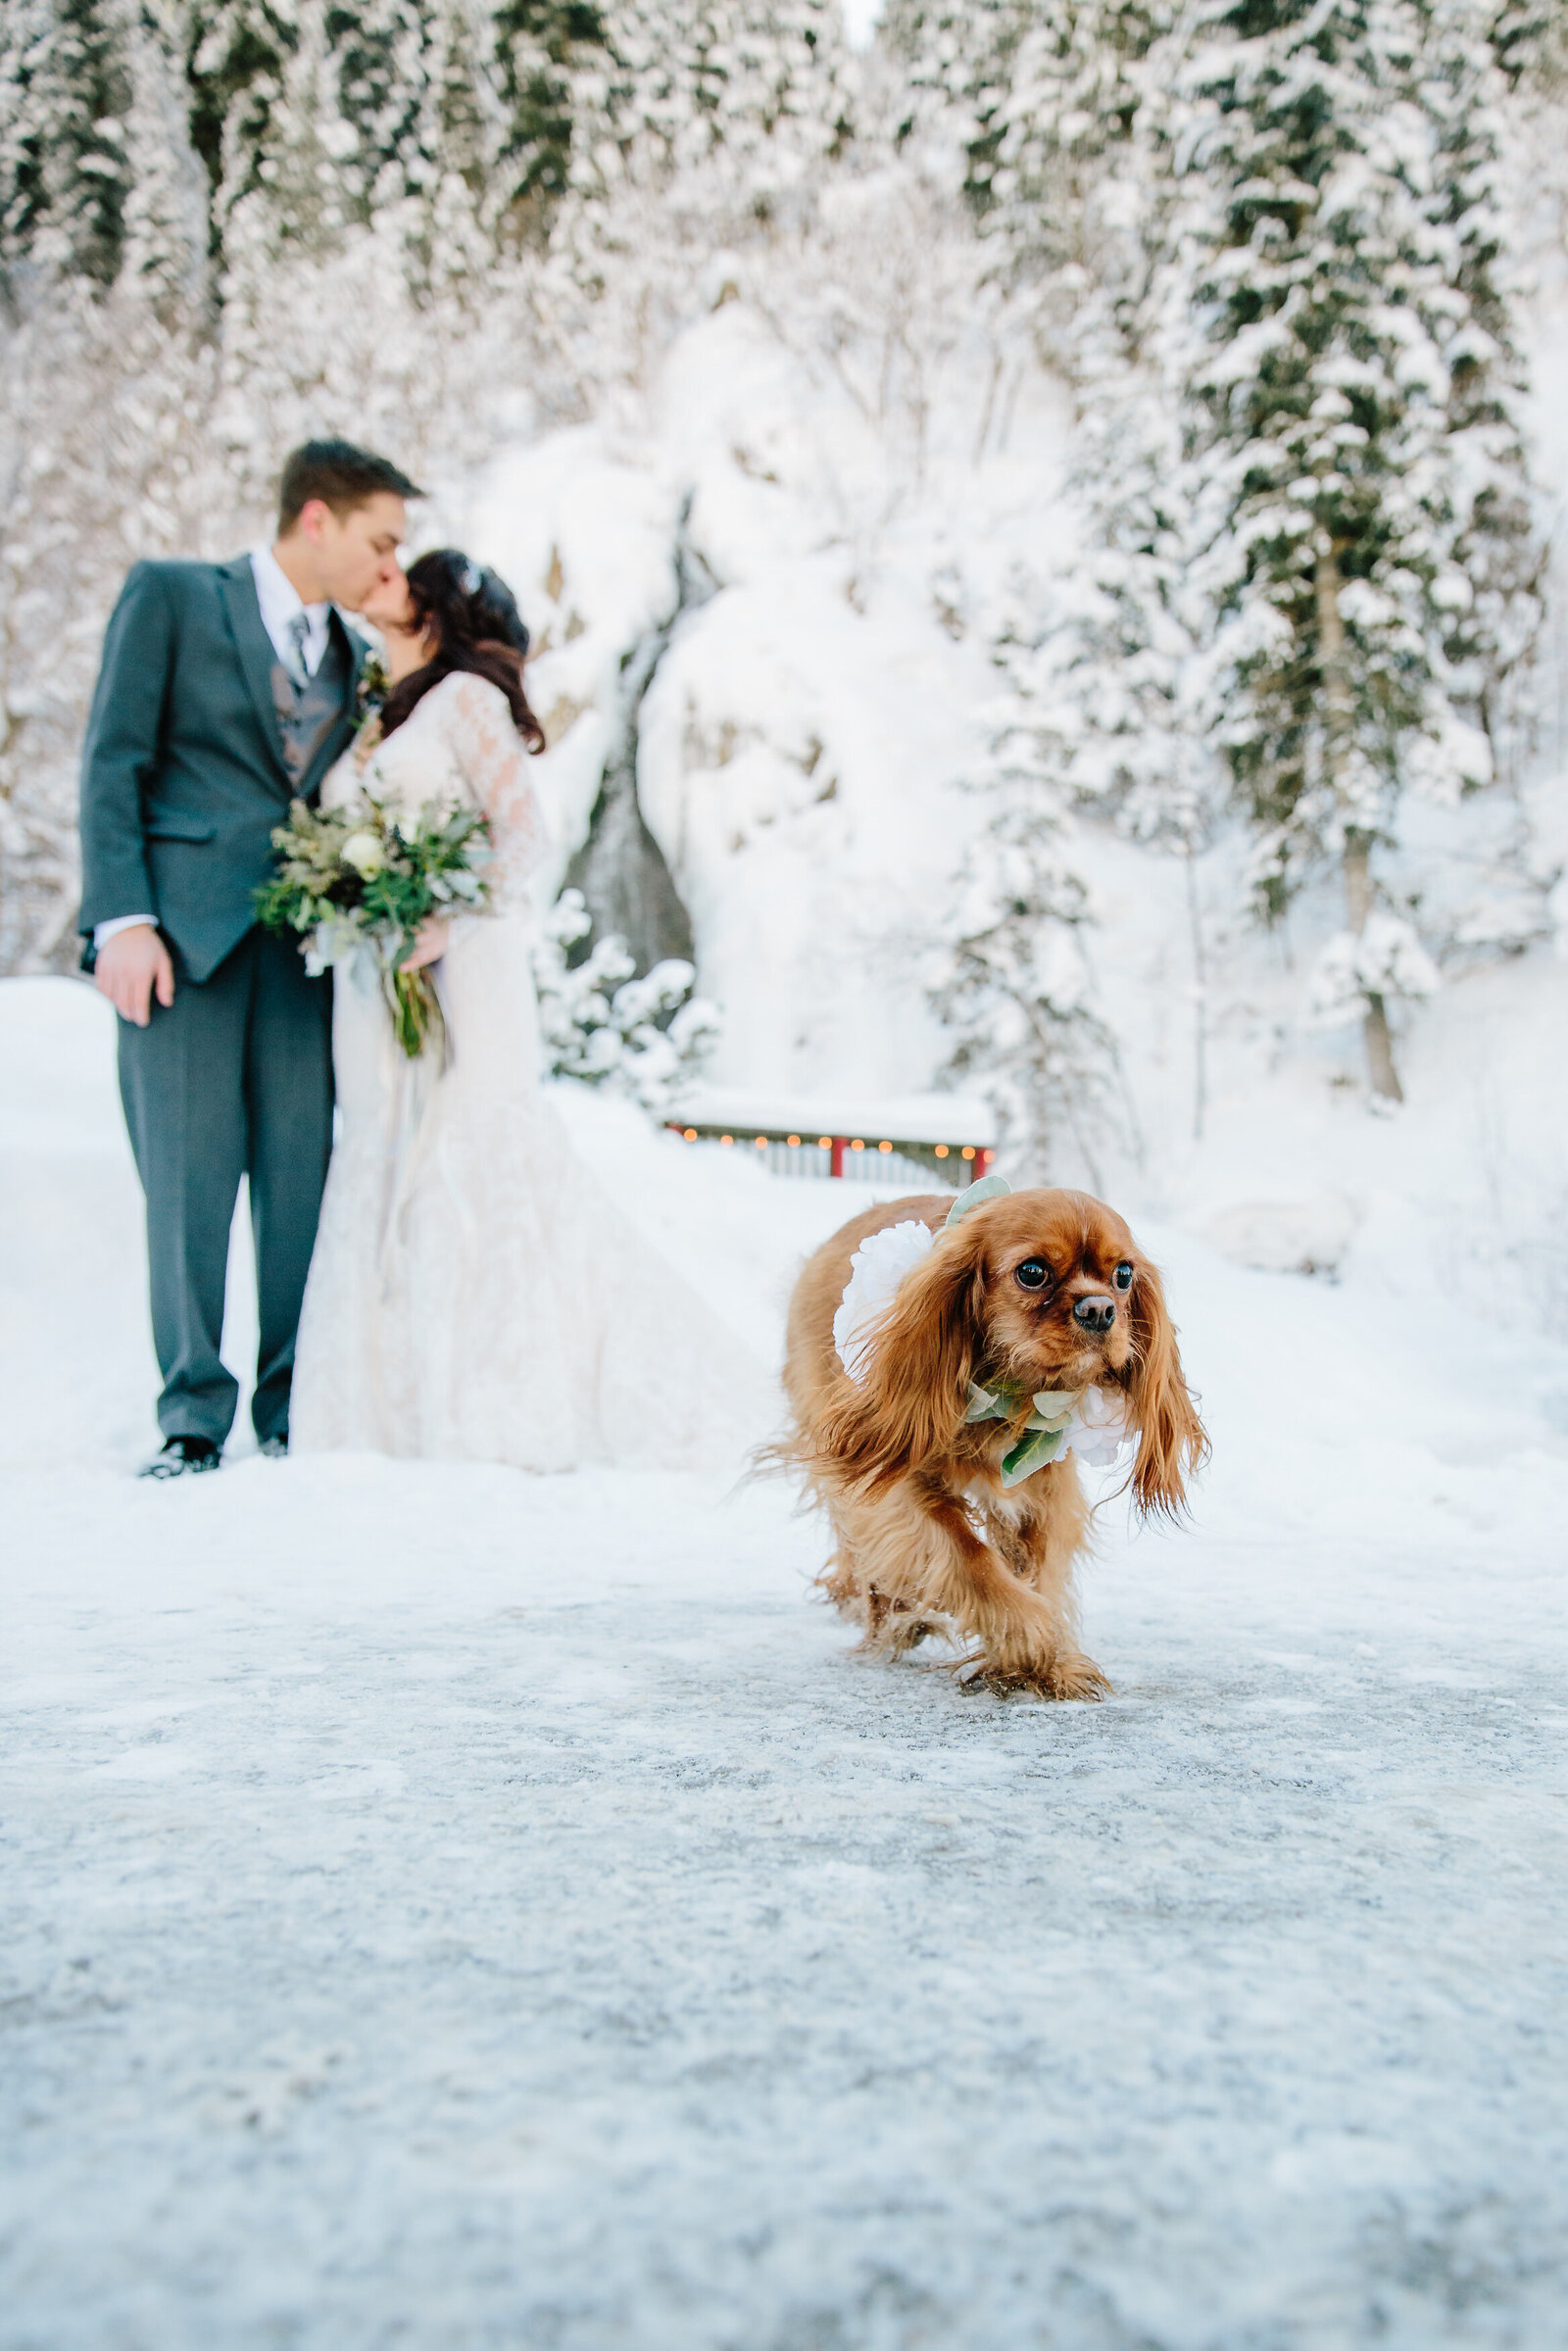 Jackson Hole photographers capture snow bridals with dog